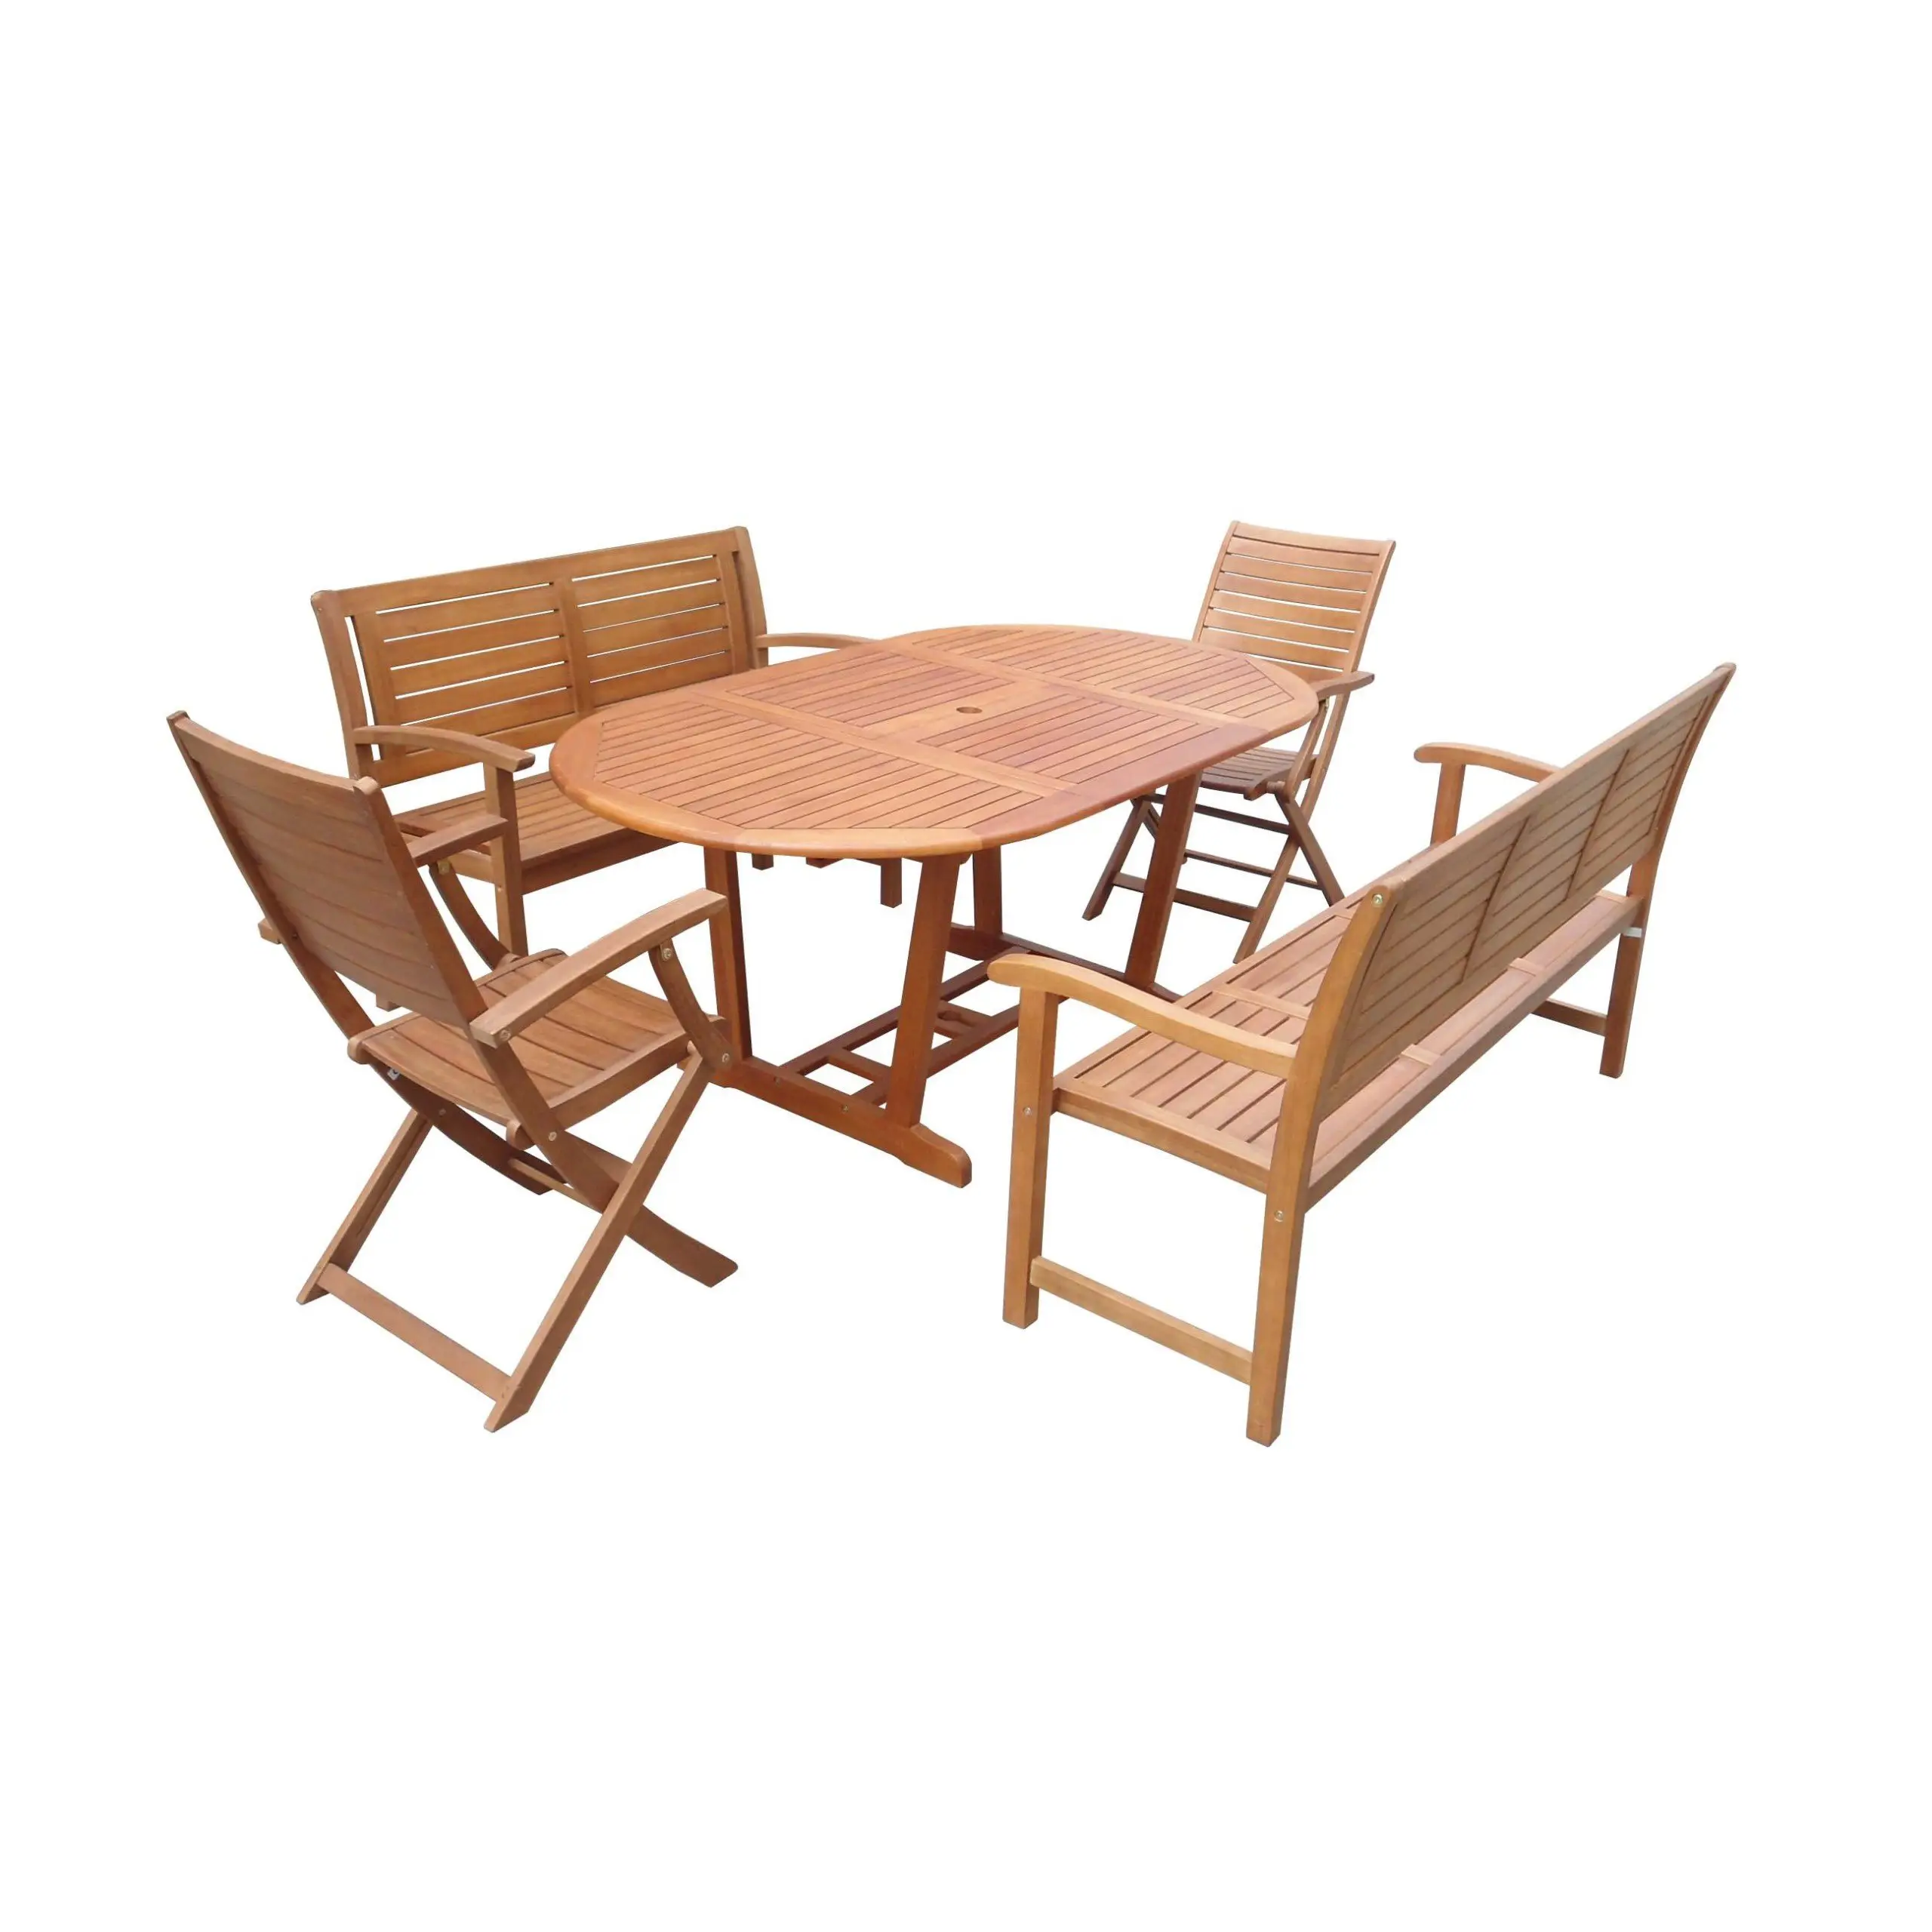 Modern Design Acacia Wood Patio Table Set Cheap Outdoor Garden Furniture Restaurant Style Wooden Material